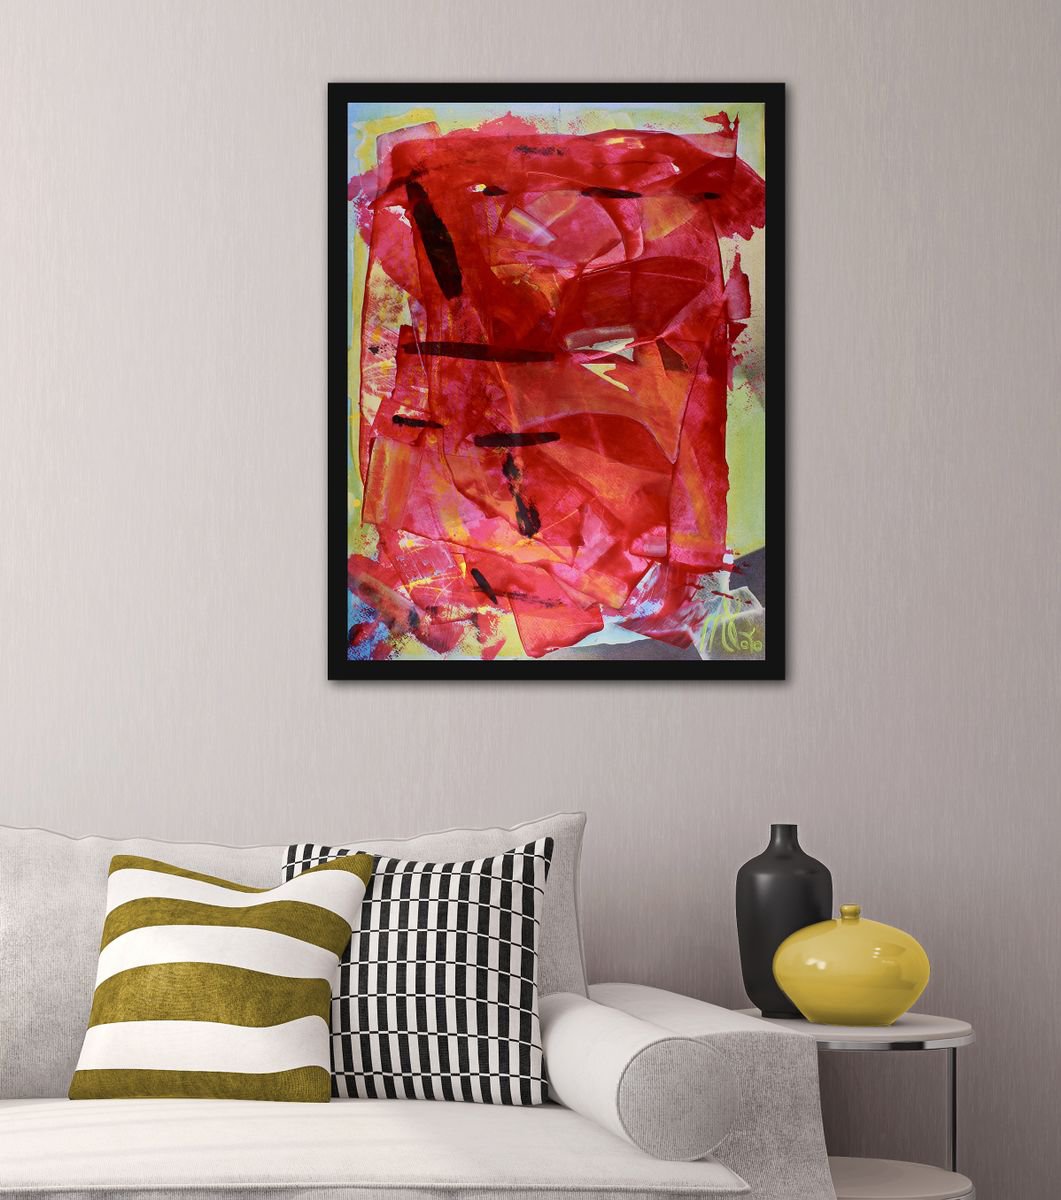 Art on paper - Scarlet spectra - 46 x 61 cm - Nestor Toro by Nestor Toro